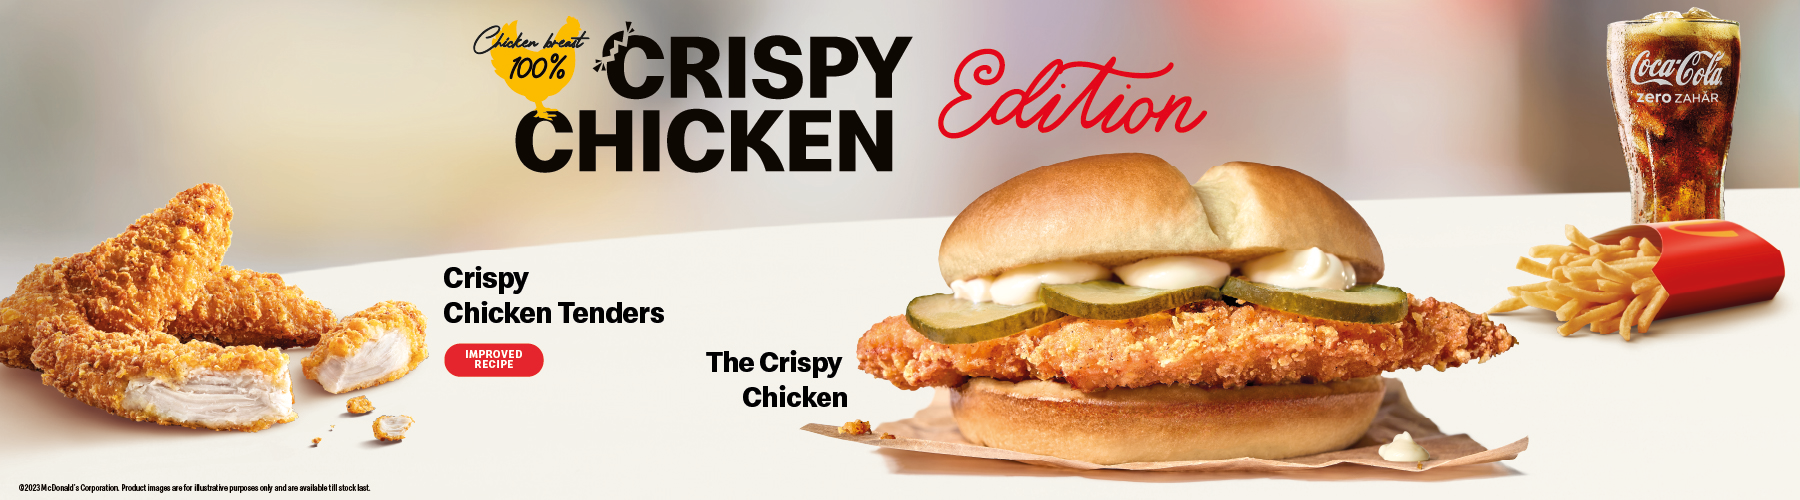 The Crispy Chicken